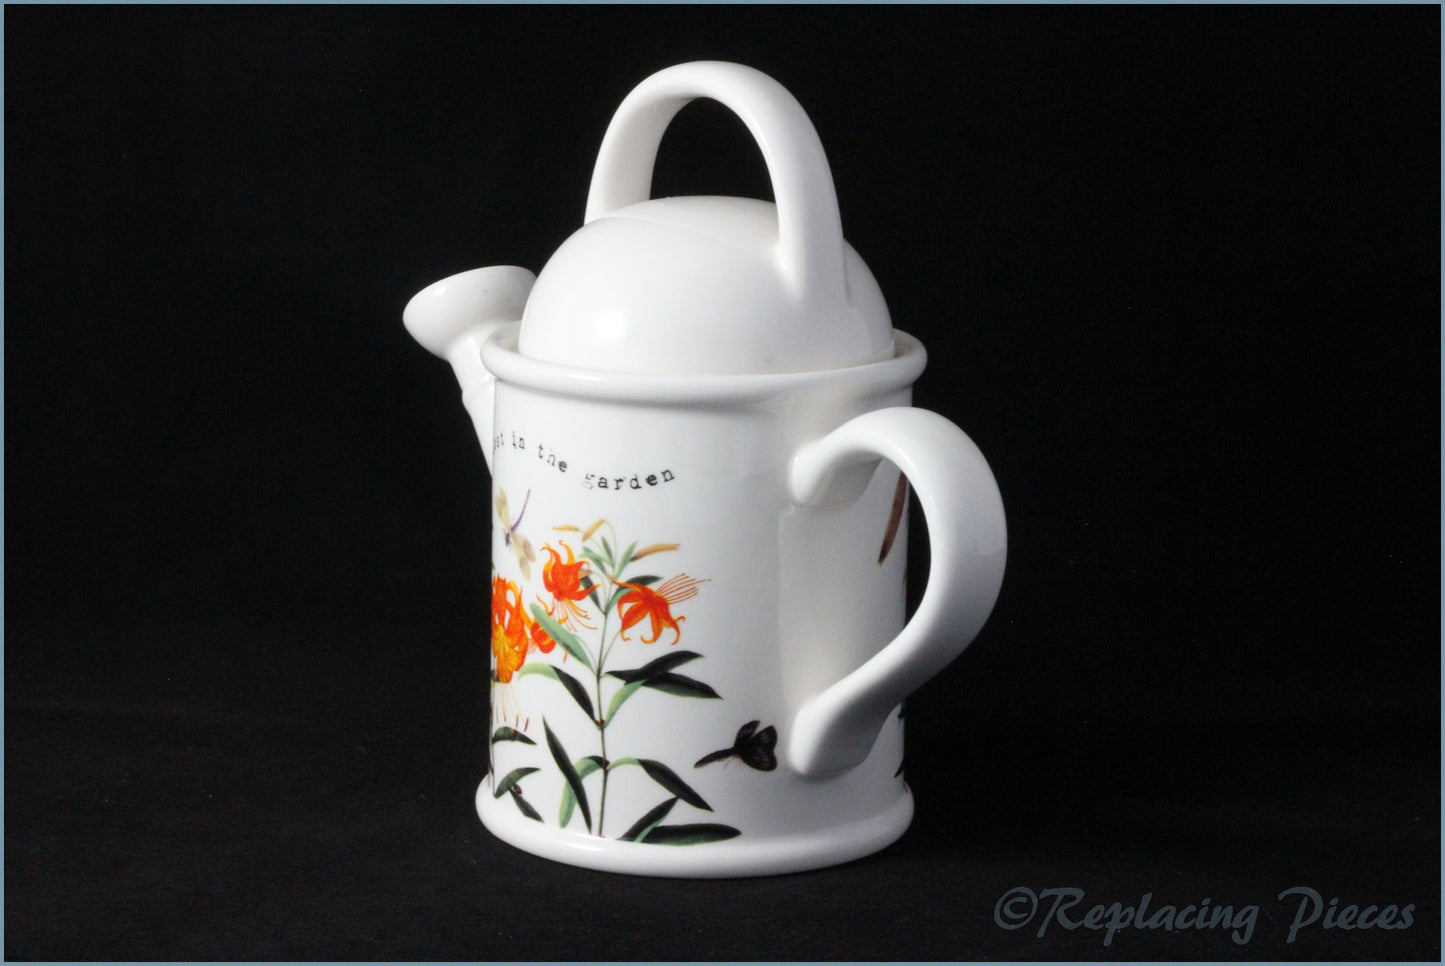 RHS - Sharing The Best In Gardening - Watering Can Teapot (Orange Flower)